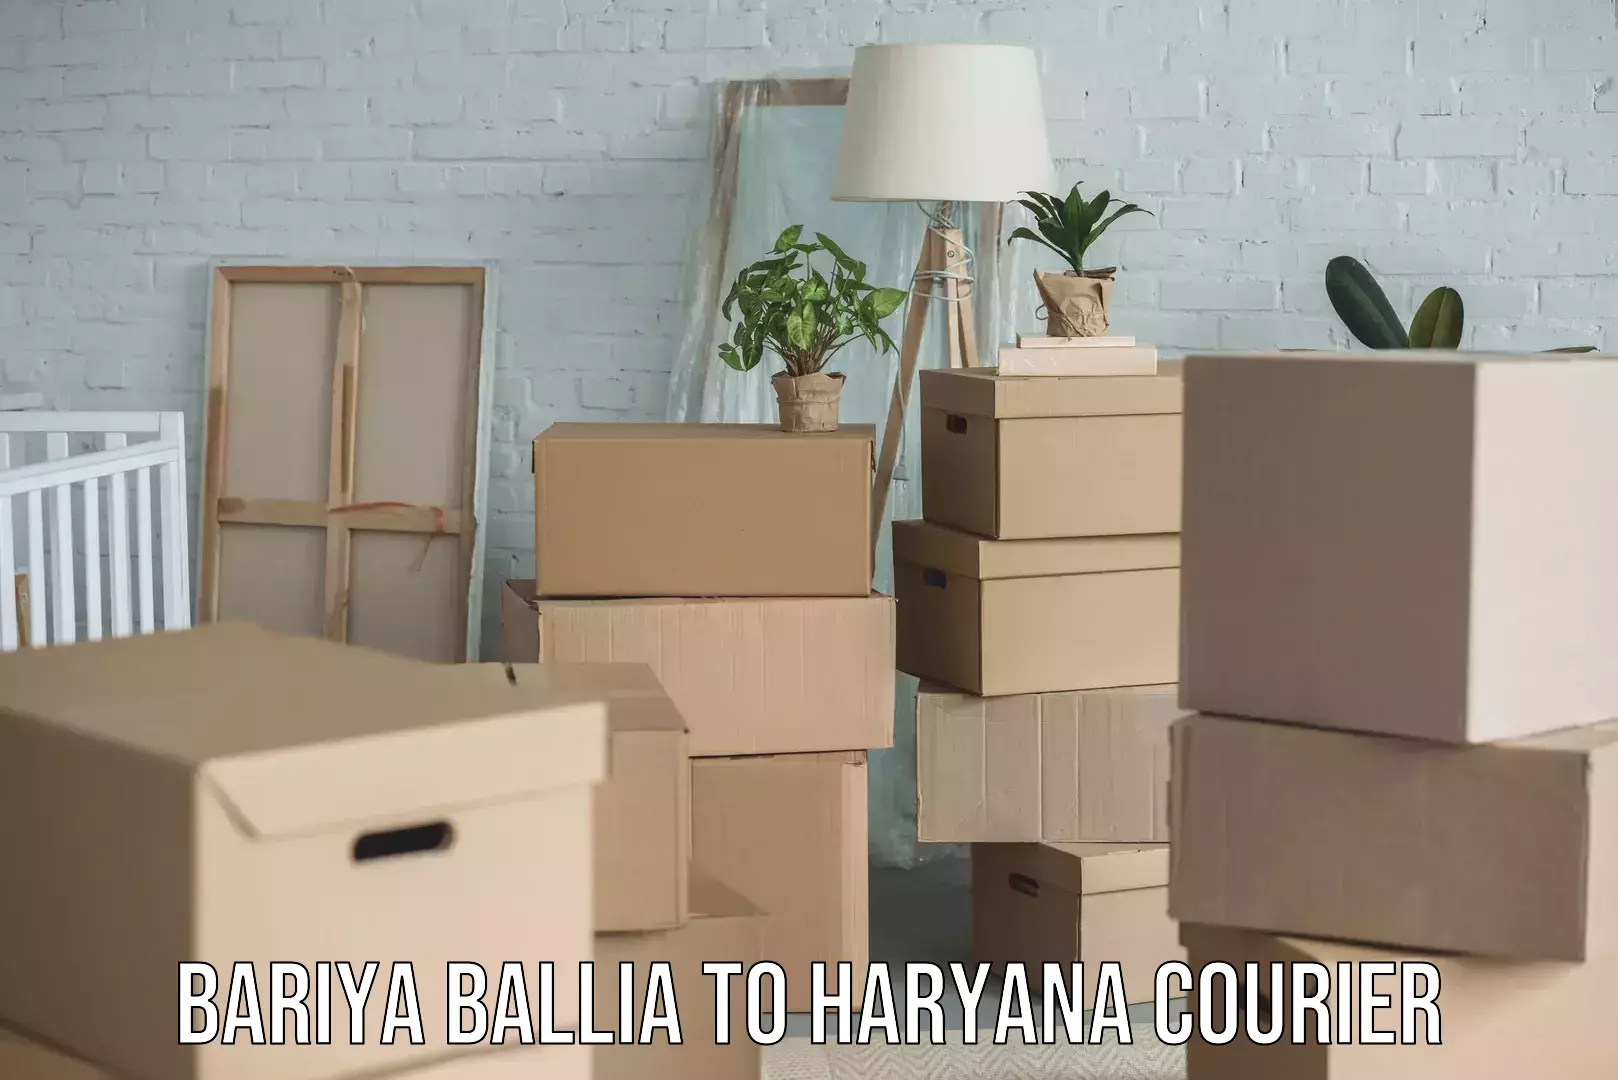 Package delivery network Bariya Ballia to Haryana